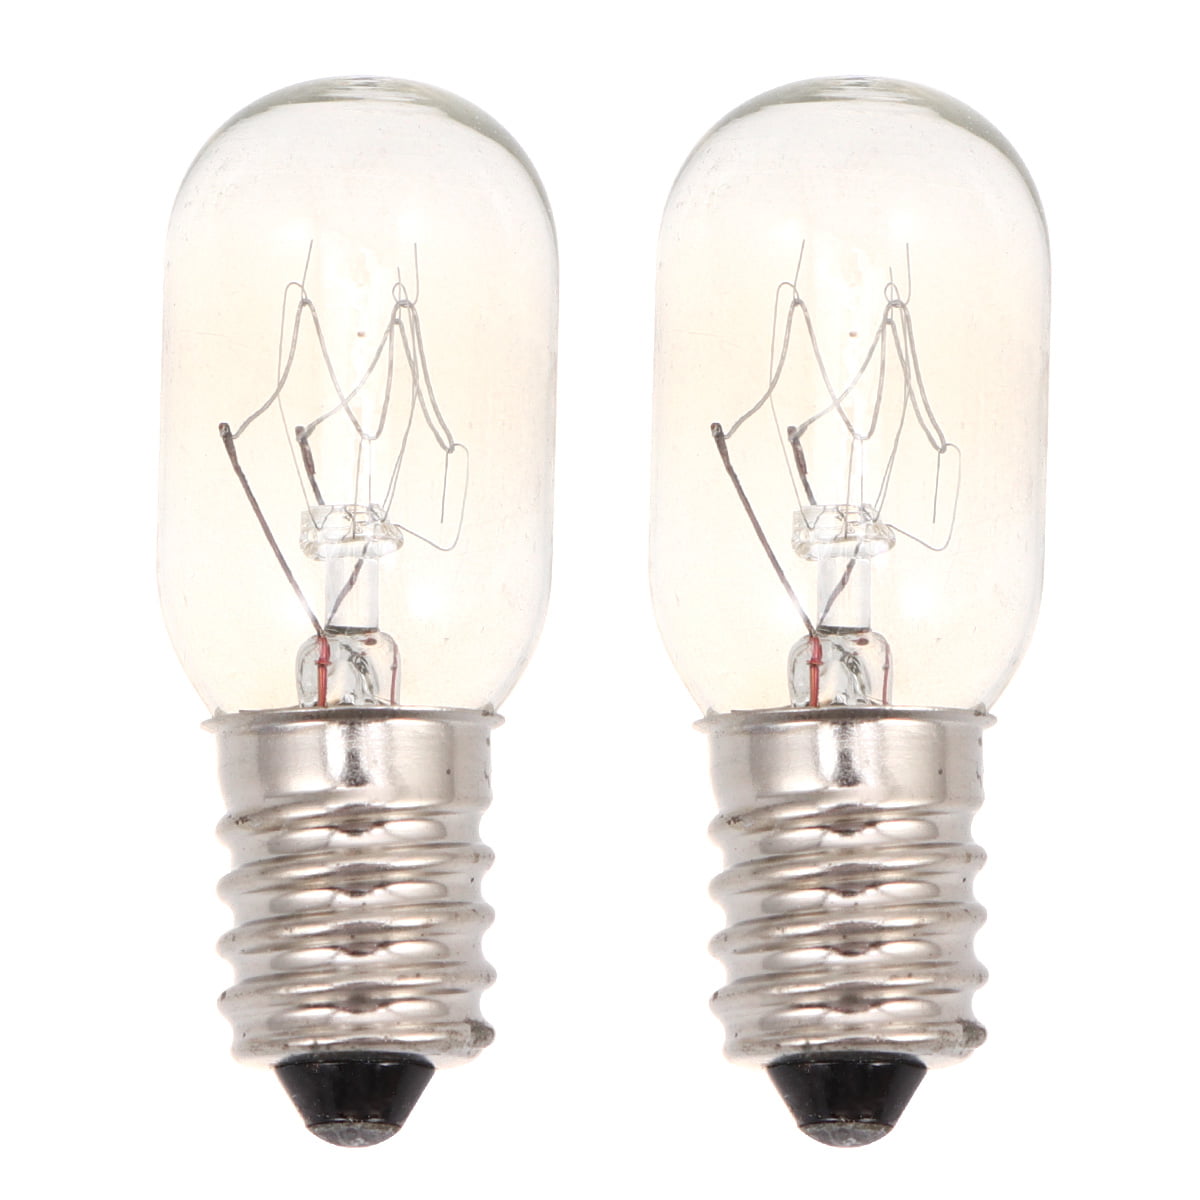 4PCS E14 Refrigerator Light Bulb 220V 15W Oven Light Bulb Replacement Bulbs for 